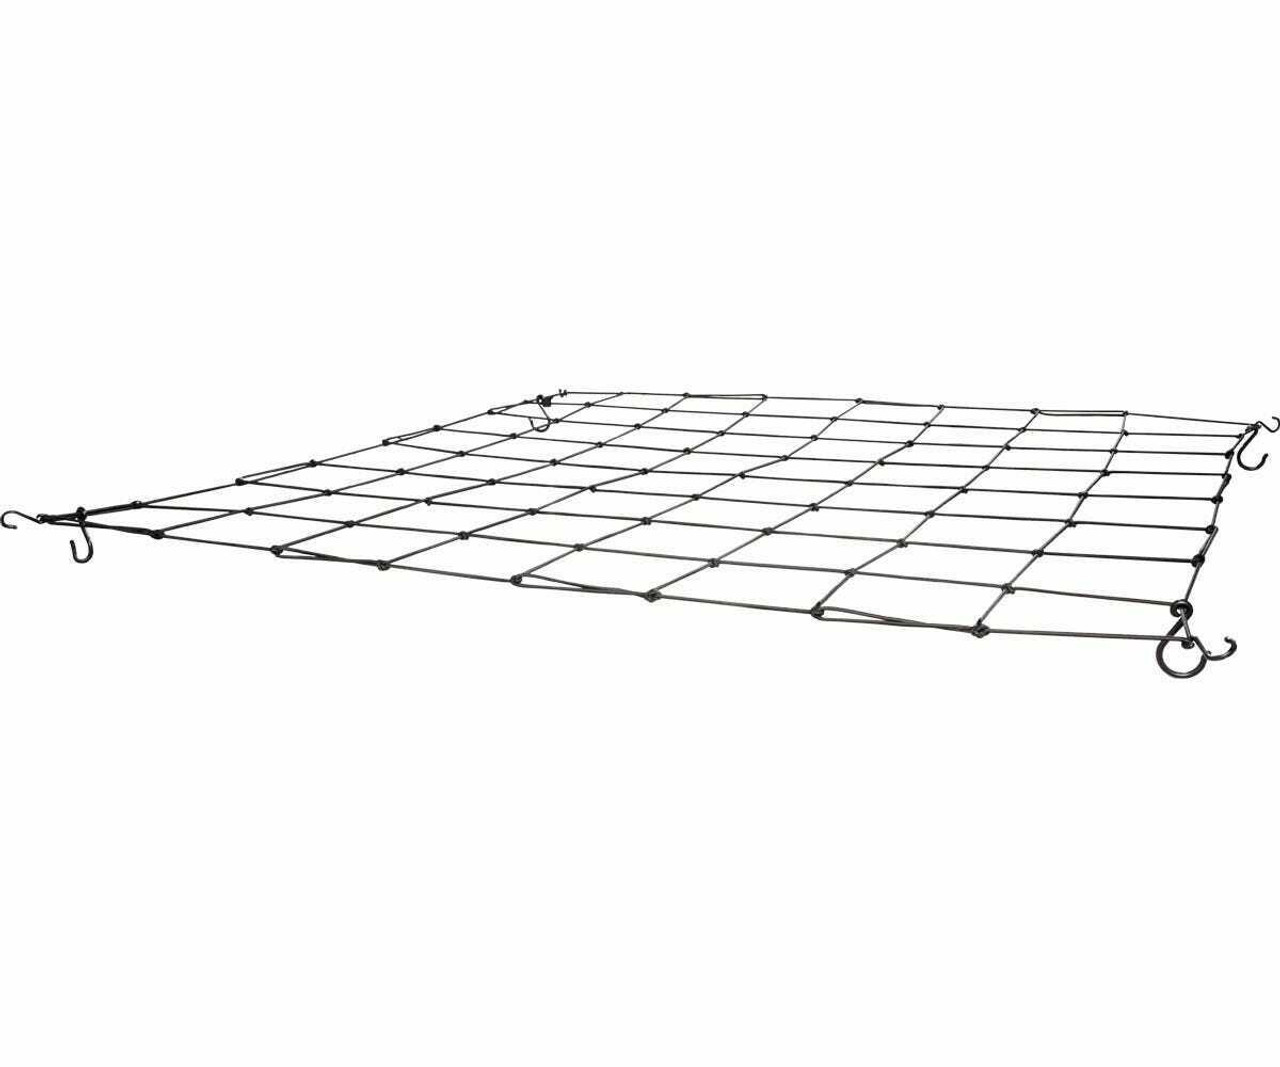 Modular trellis for tents 5'x5' - 4